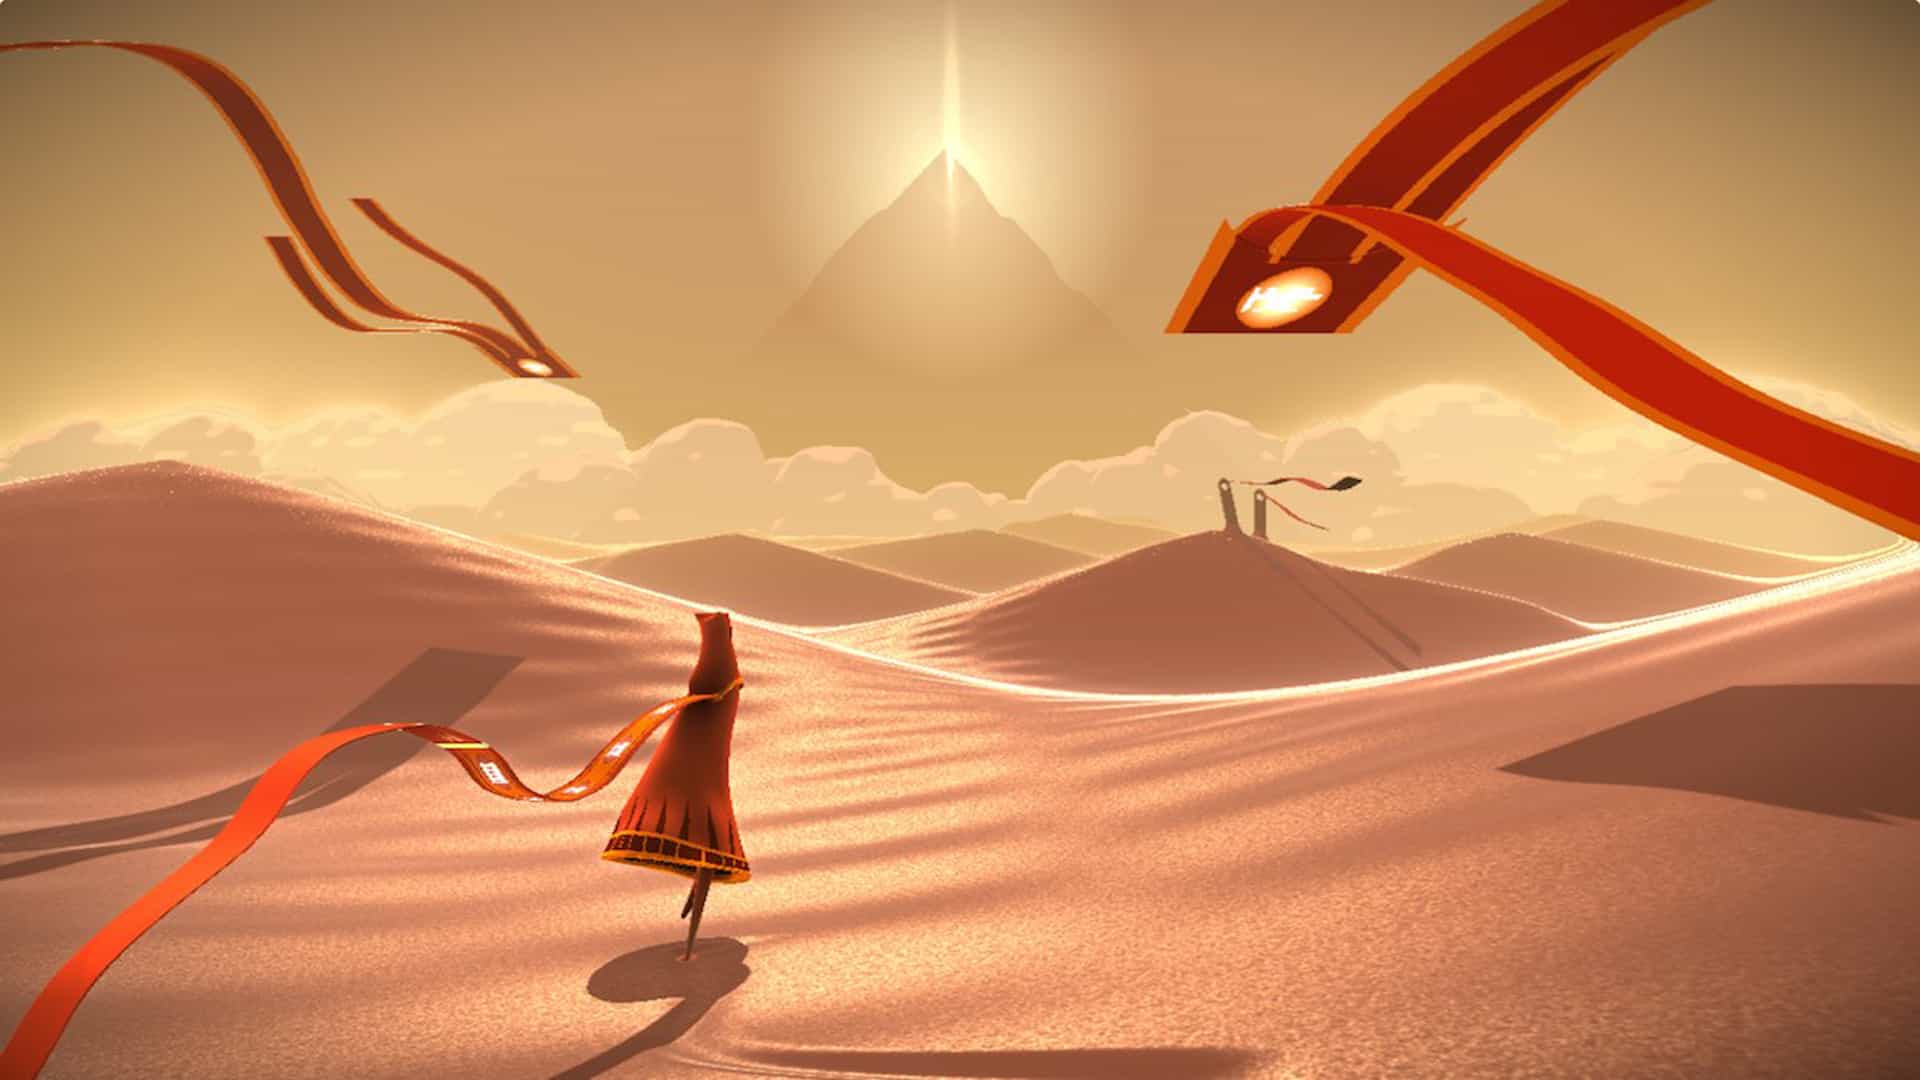 Journey r. Journey игра thatgamecompany. Journey (игра, 2012). Джорни путешествие игра. Пустыня из игры Джорни.